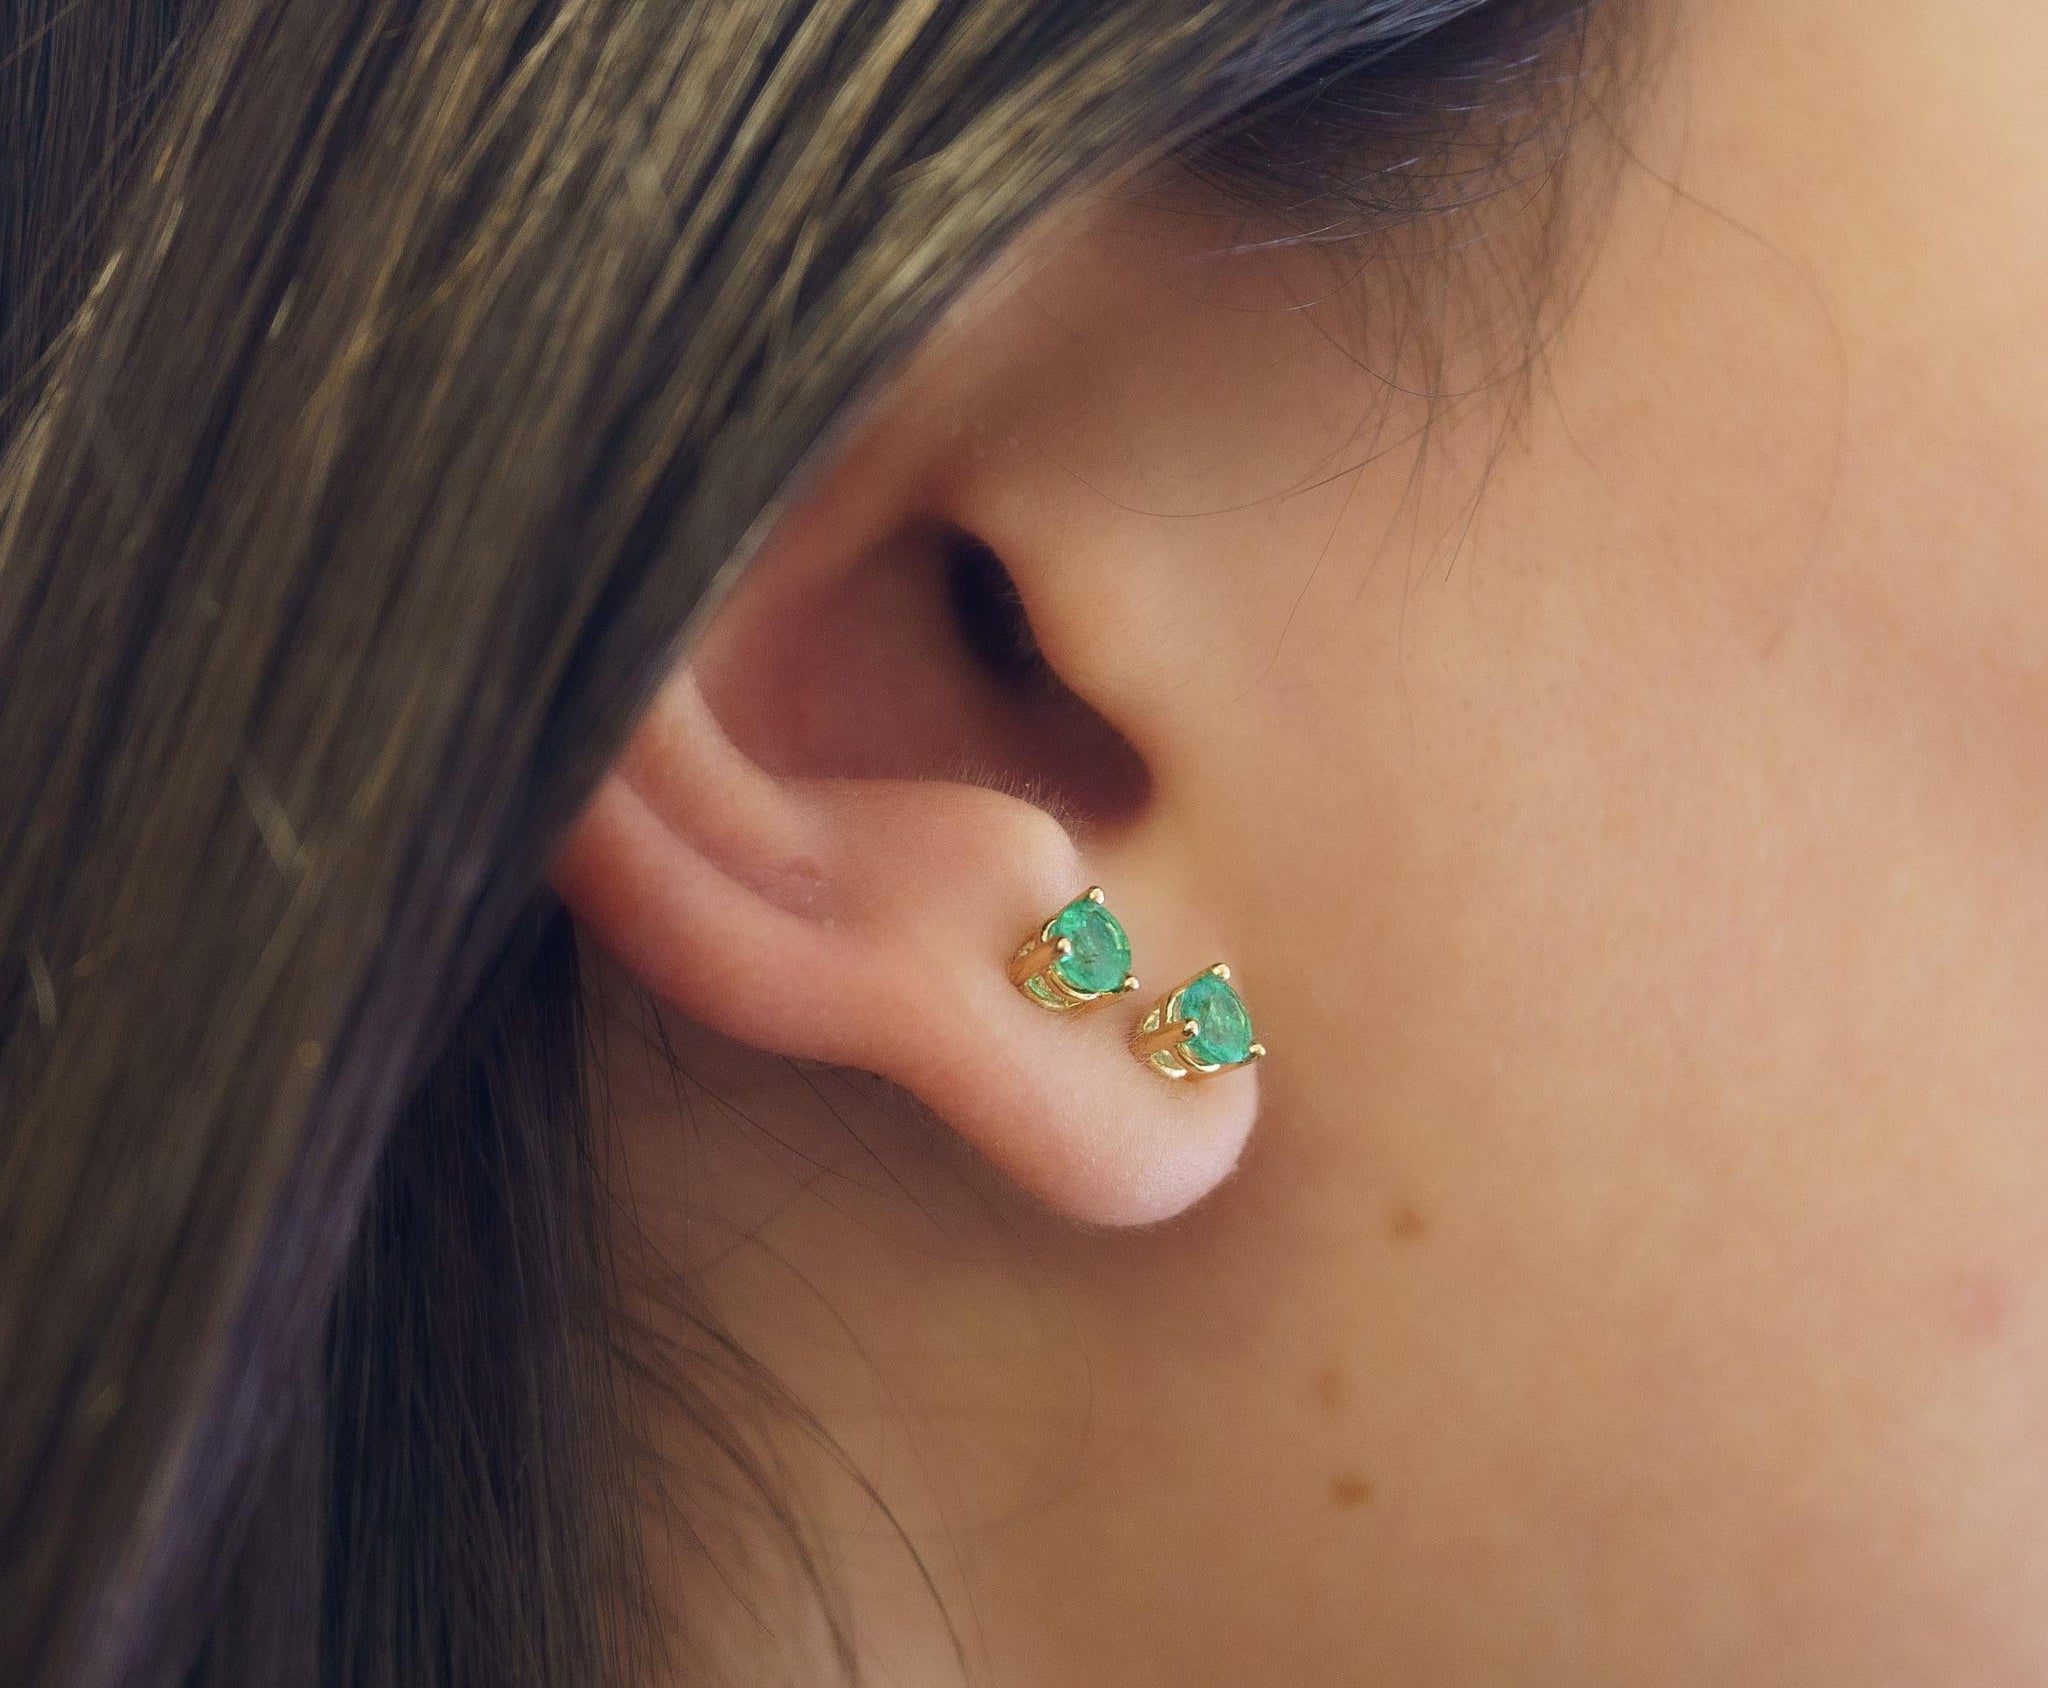 Pink Sapphire Stud Earrings 4mm in Sterling Silver – Kathy Bankston